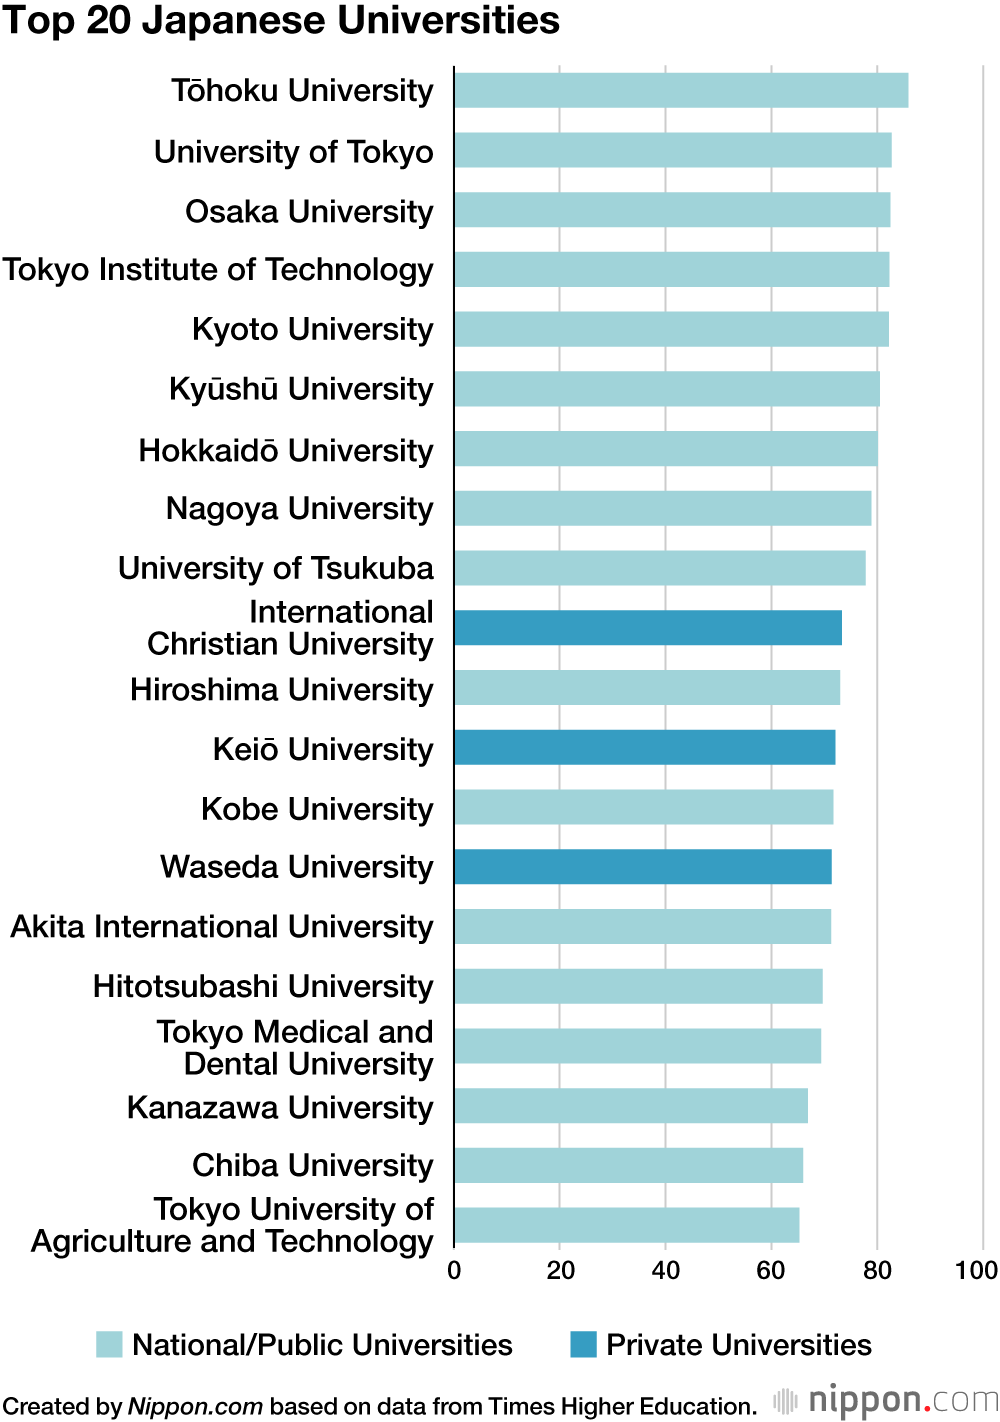 Top 20 Japanese Universities